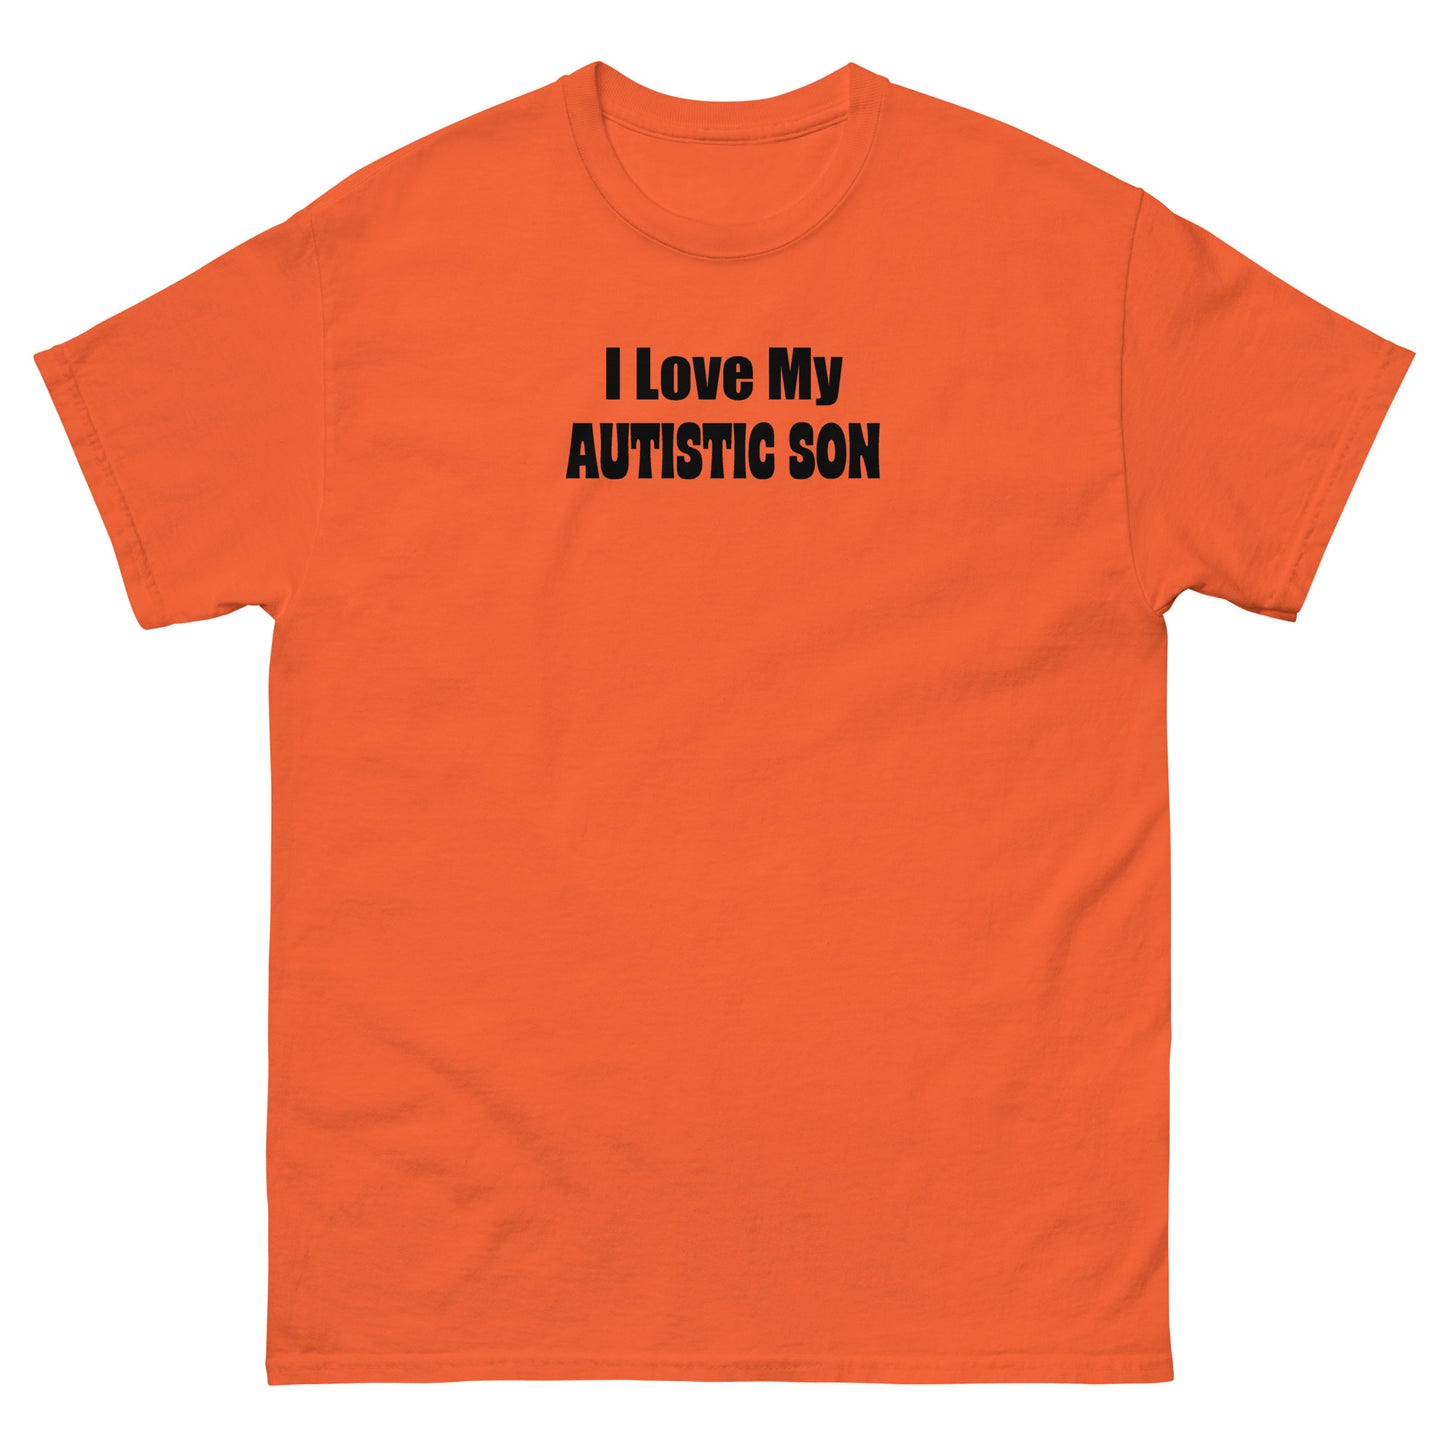 I Love My Autistic Son Tee (Orange)